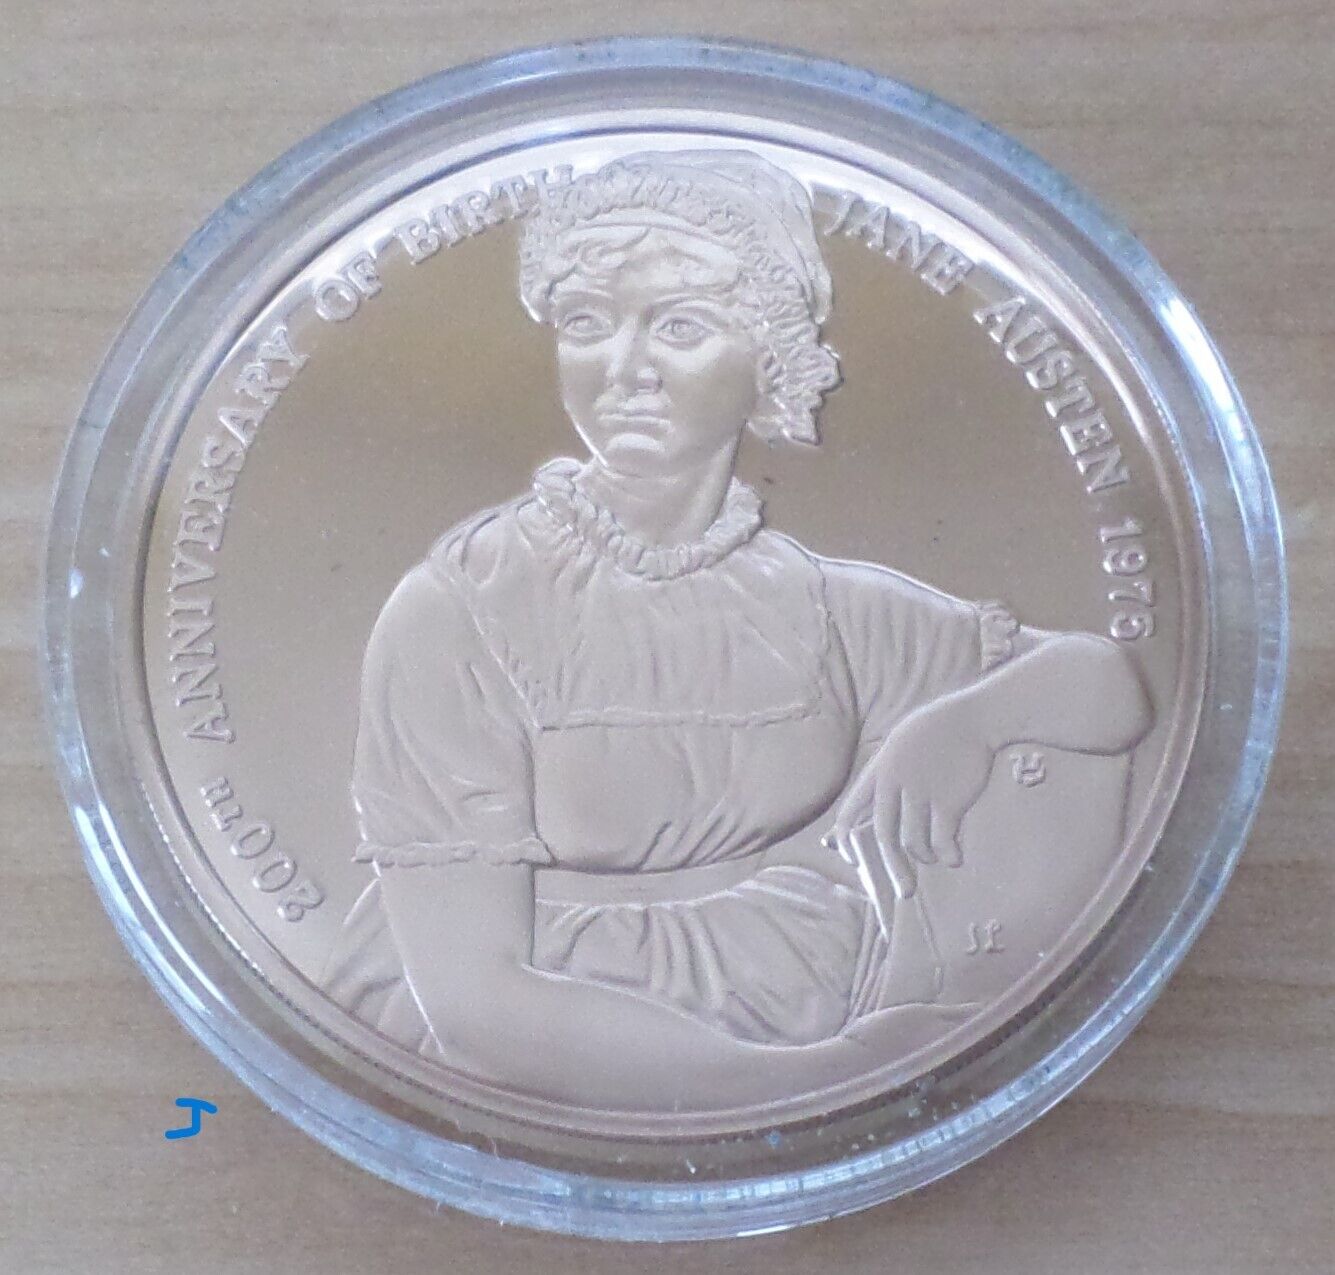 Jane Austen Author of Sense & Sensibility, Emma, Pride & Prejudice Bronze Medal